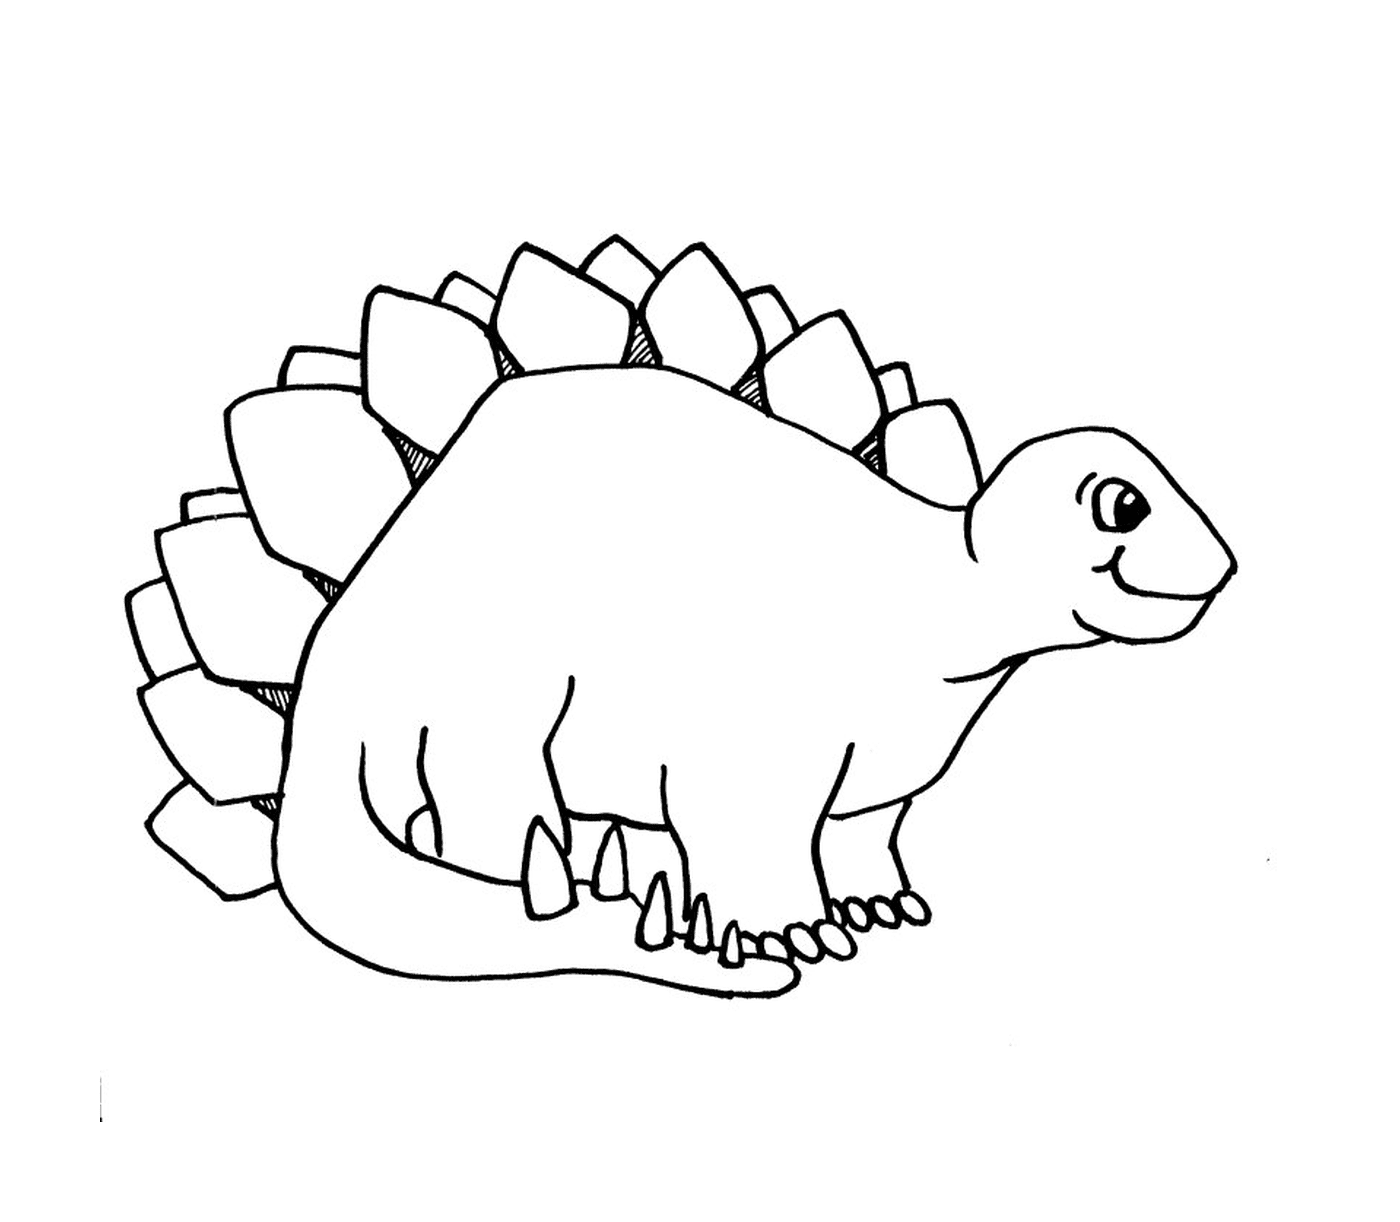  um stegosaurus 